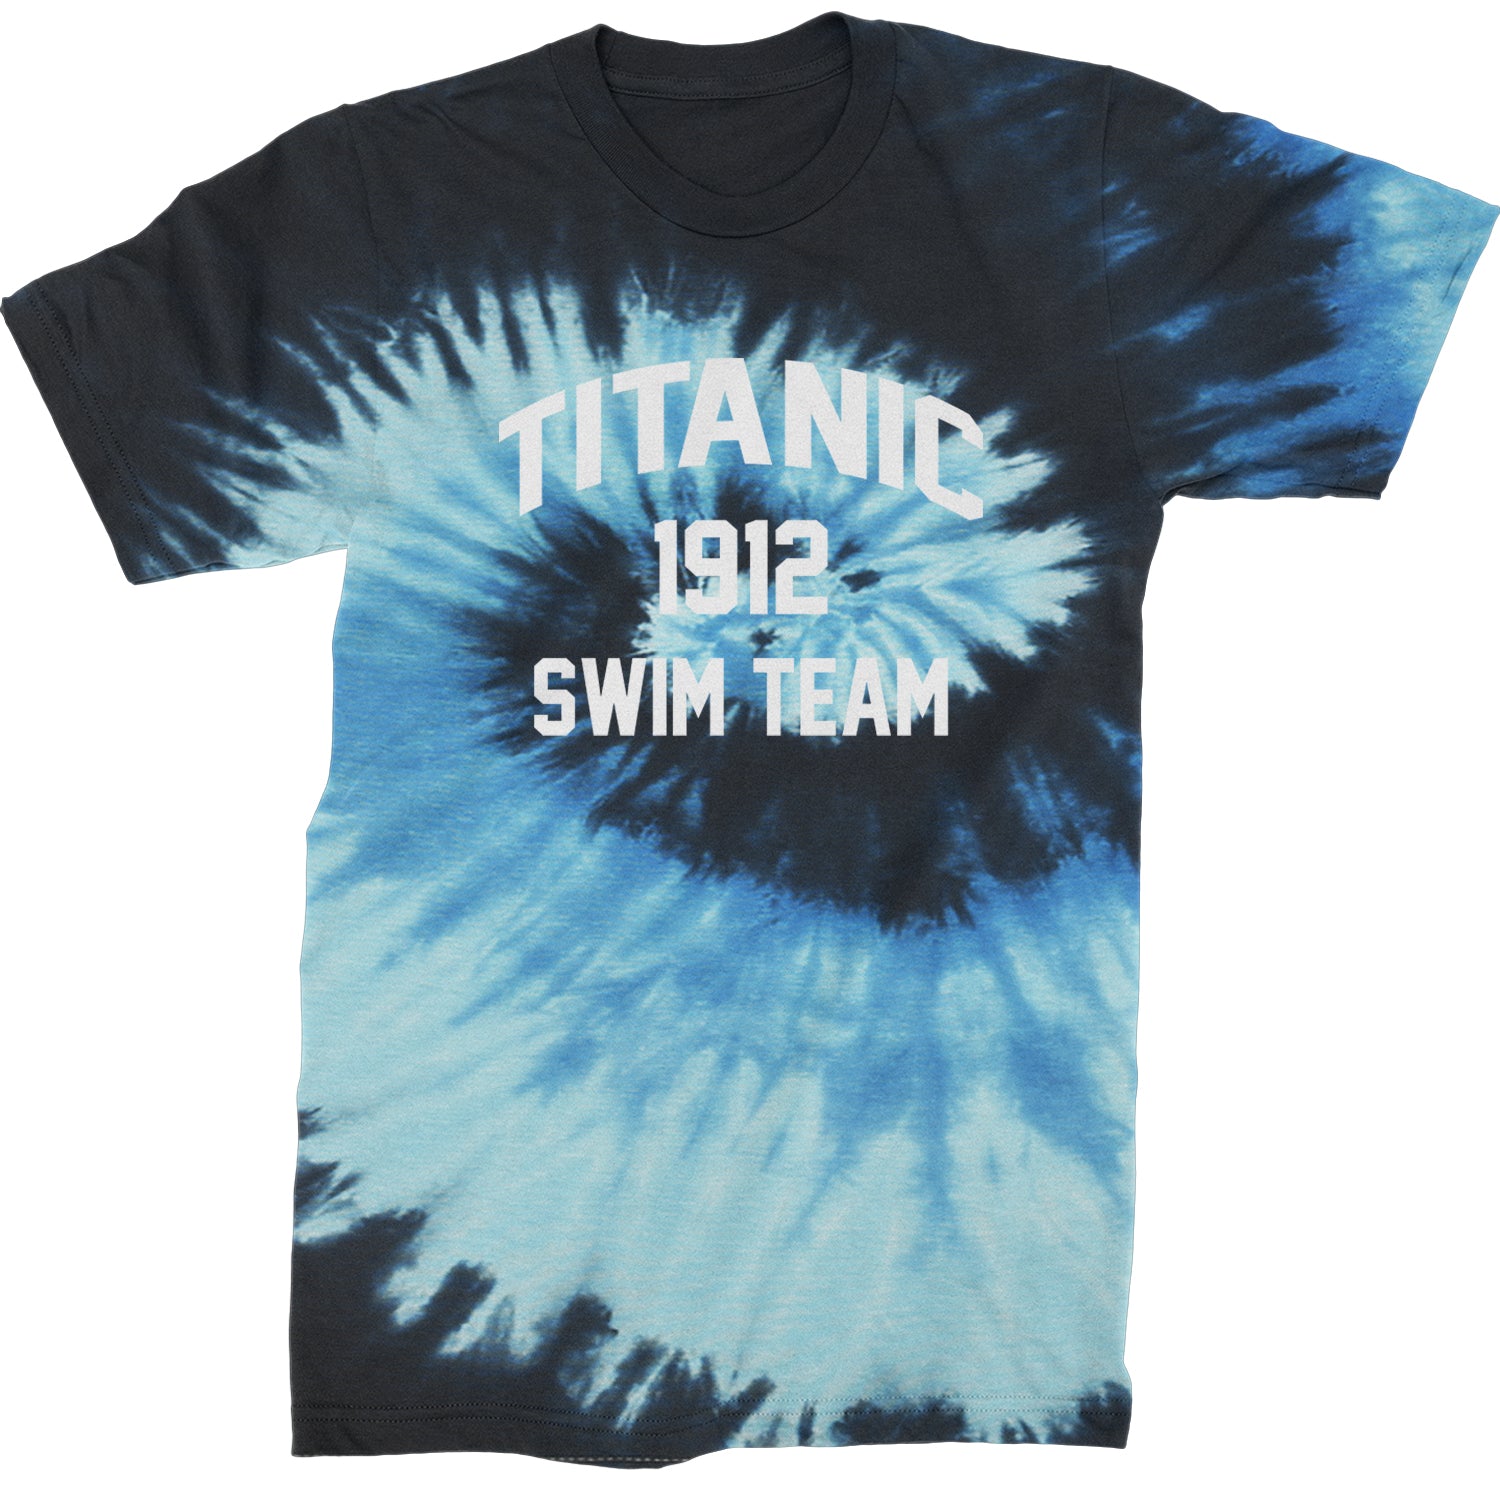 Titanic Swim Team 1912 Funny Cruise Mens T-shirt